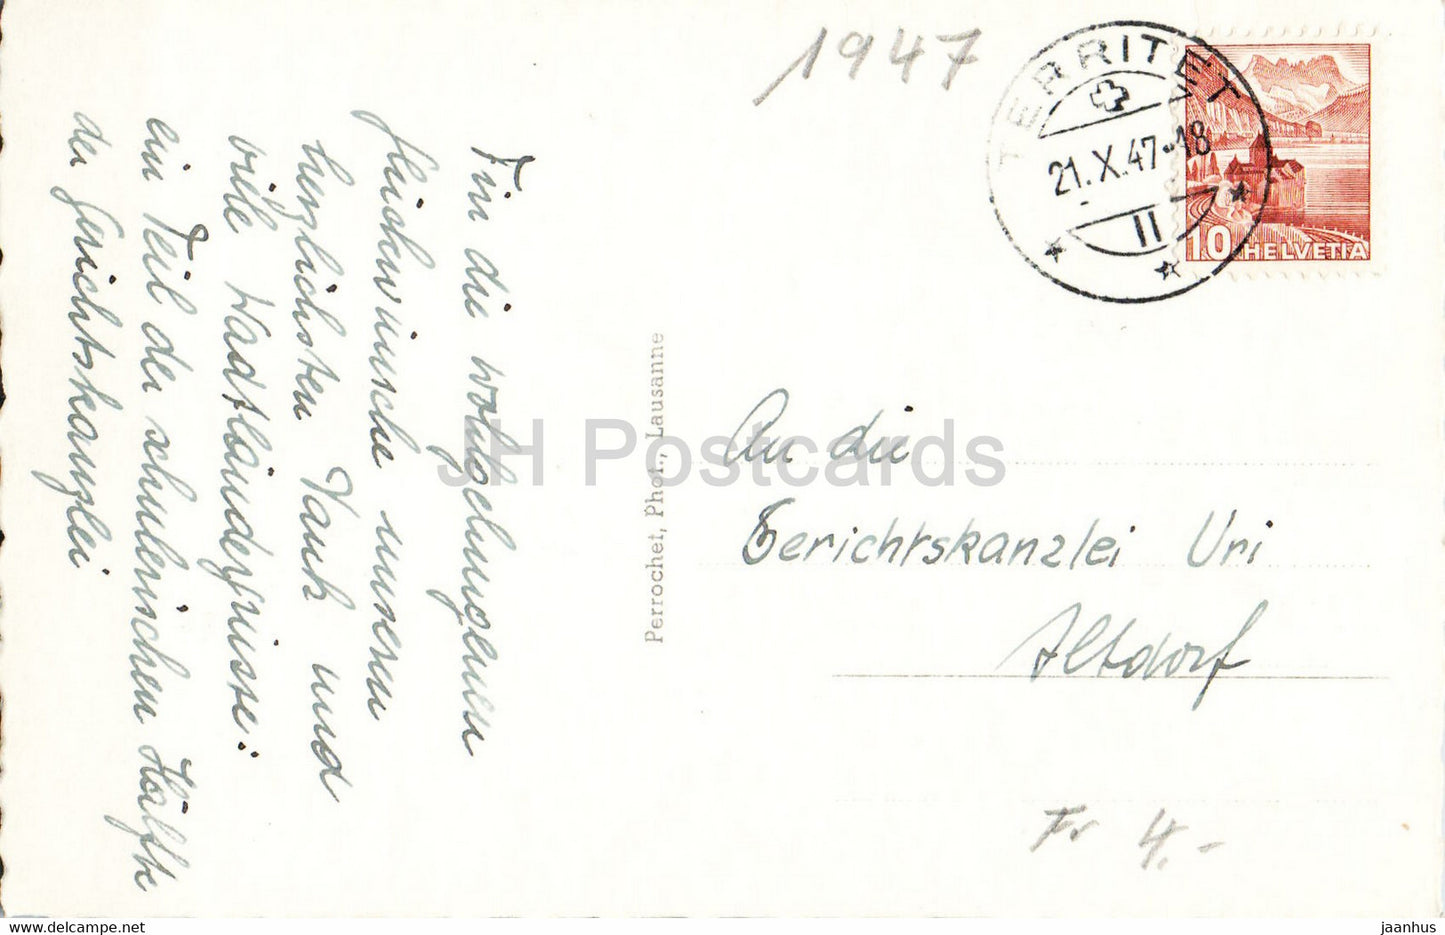 Lausanne - La Cathedrale illuminée - Kathedrale - 773 - 1947 - alte Postkarte - Schweiz - gebraucht